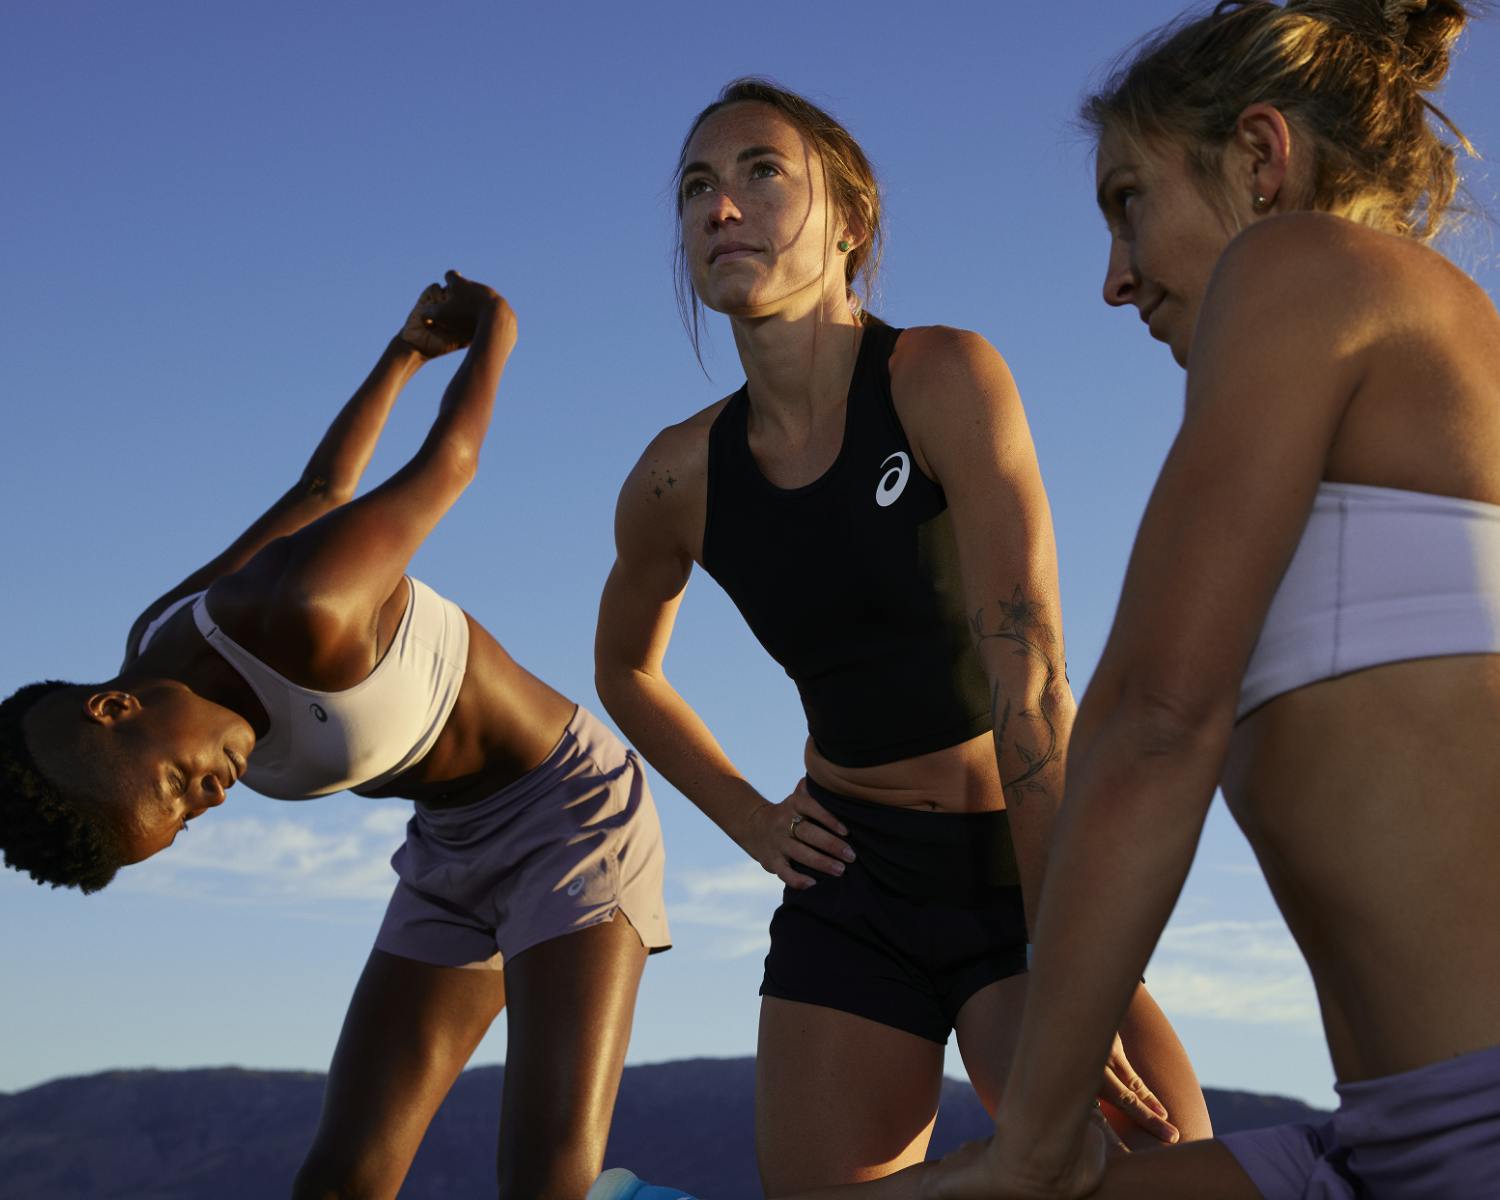 Buy Adidas Womens Running Athletics Briefs - Blue Online at